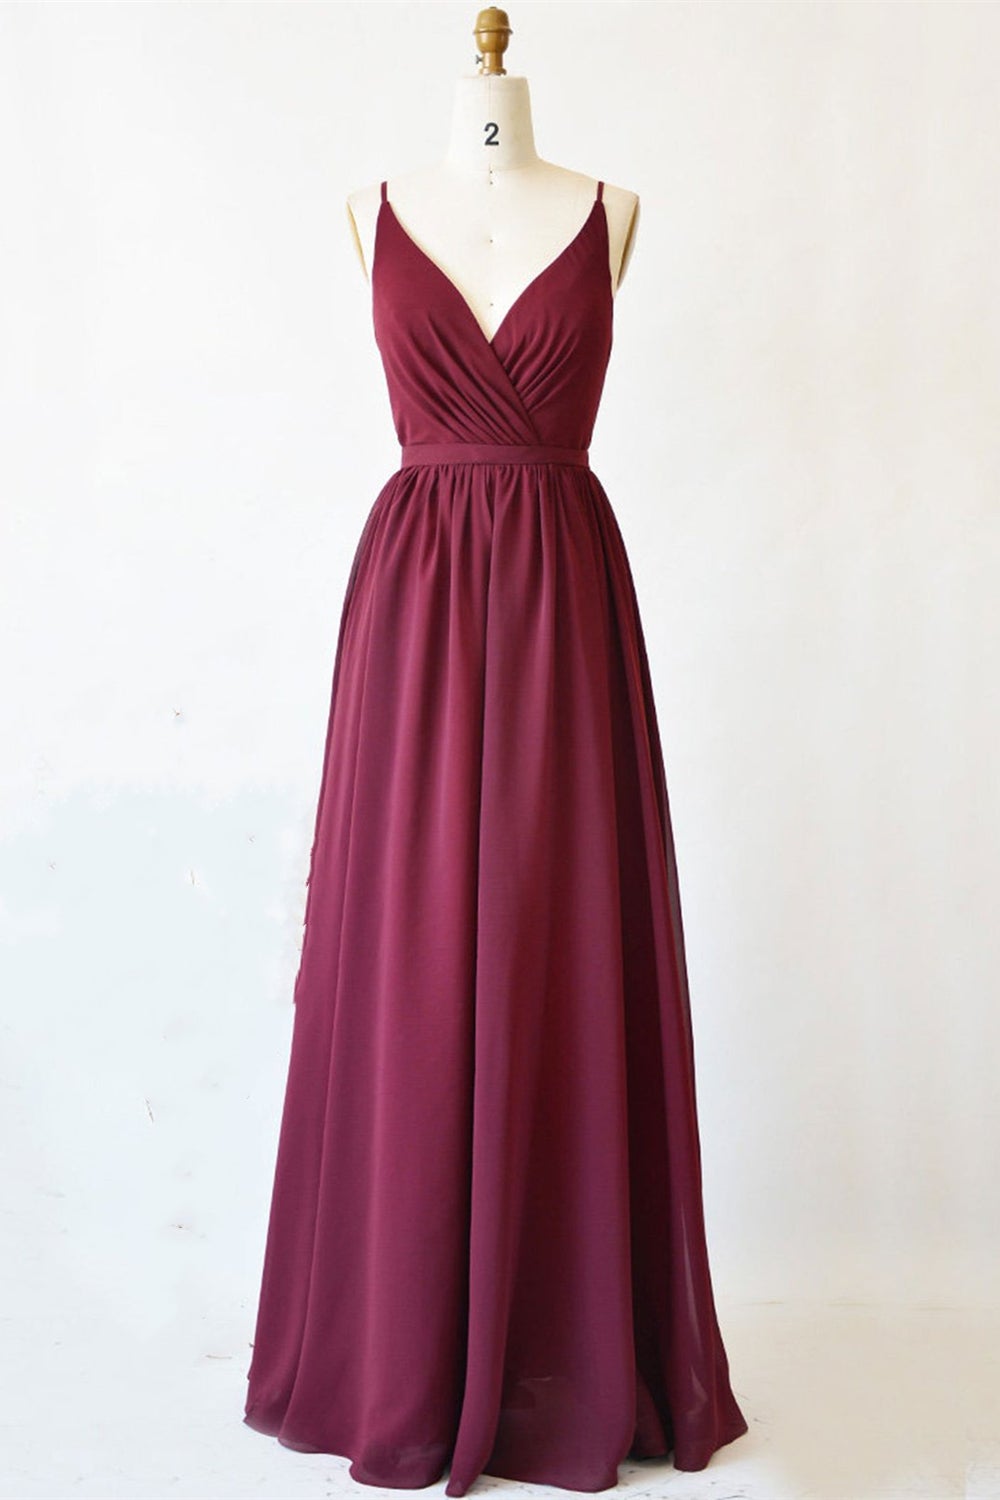 A Line V Neck Burgundy Long Prom Dress with Lace Back, V Neck Burgundy Formal Evening Dress, Burgundy Bridesmaid Dress